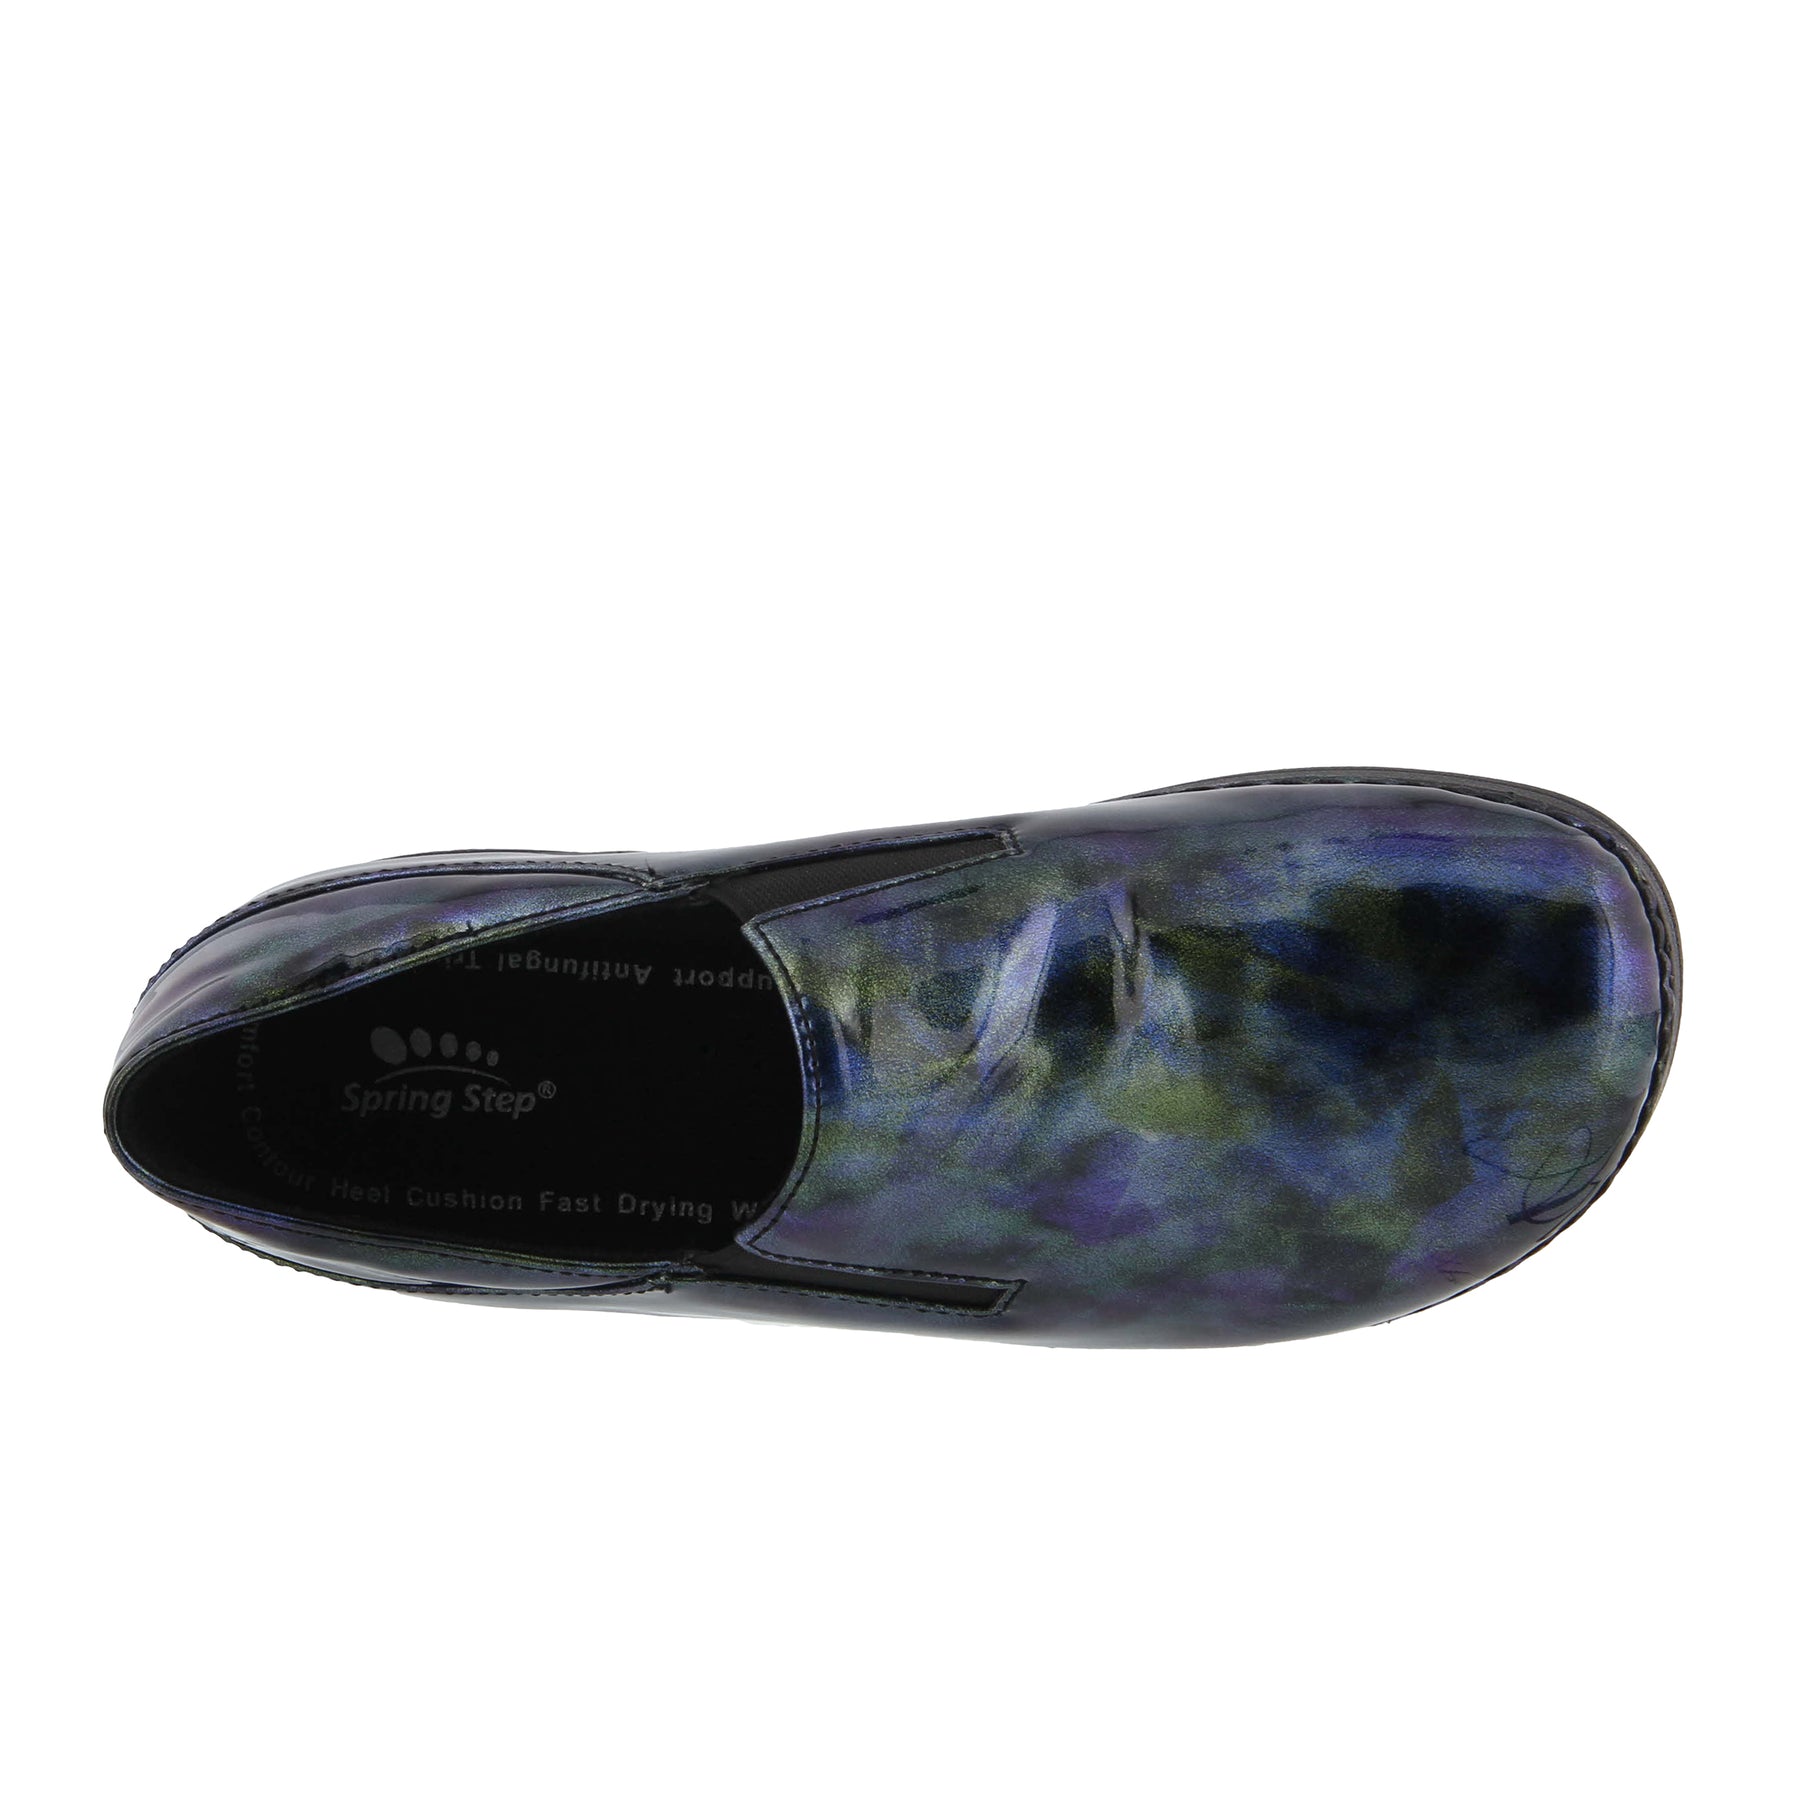 FERRARA-FOG SLIP-ON SHOE by SPRING STEP PROFESSIONAL – Spring Step Shoes